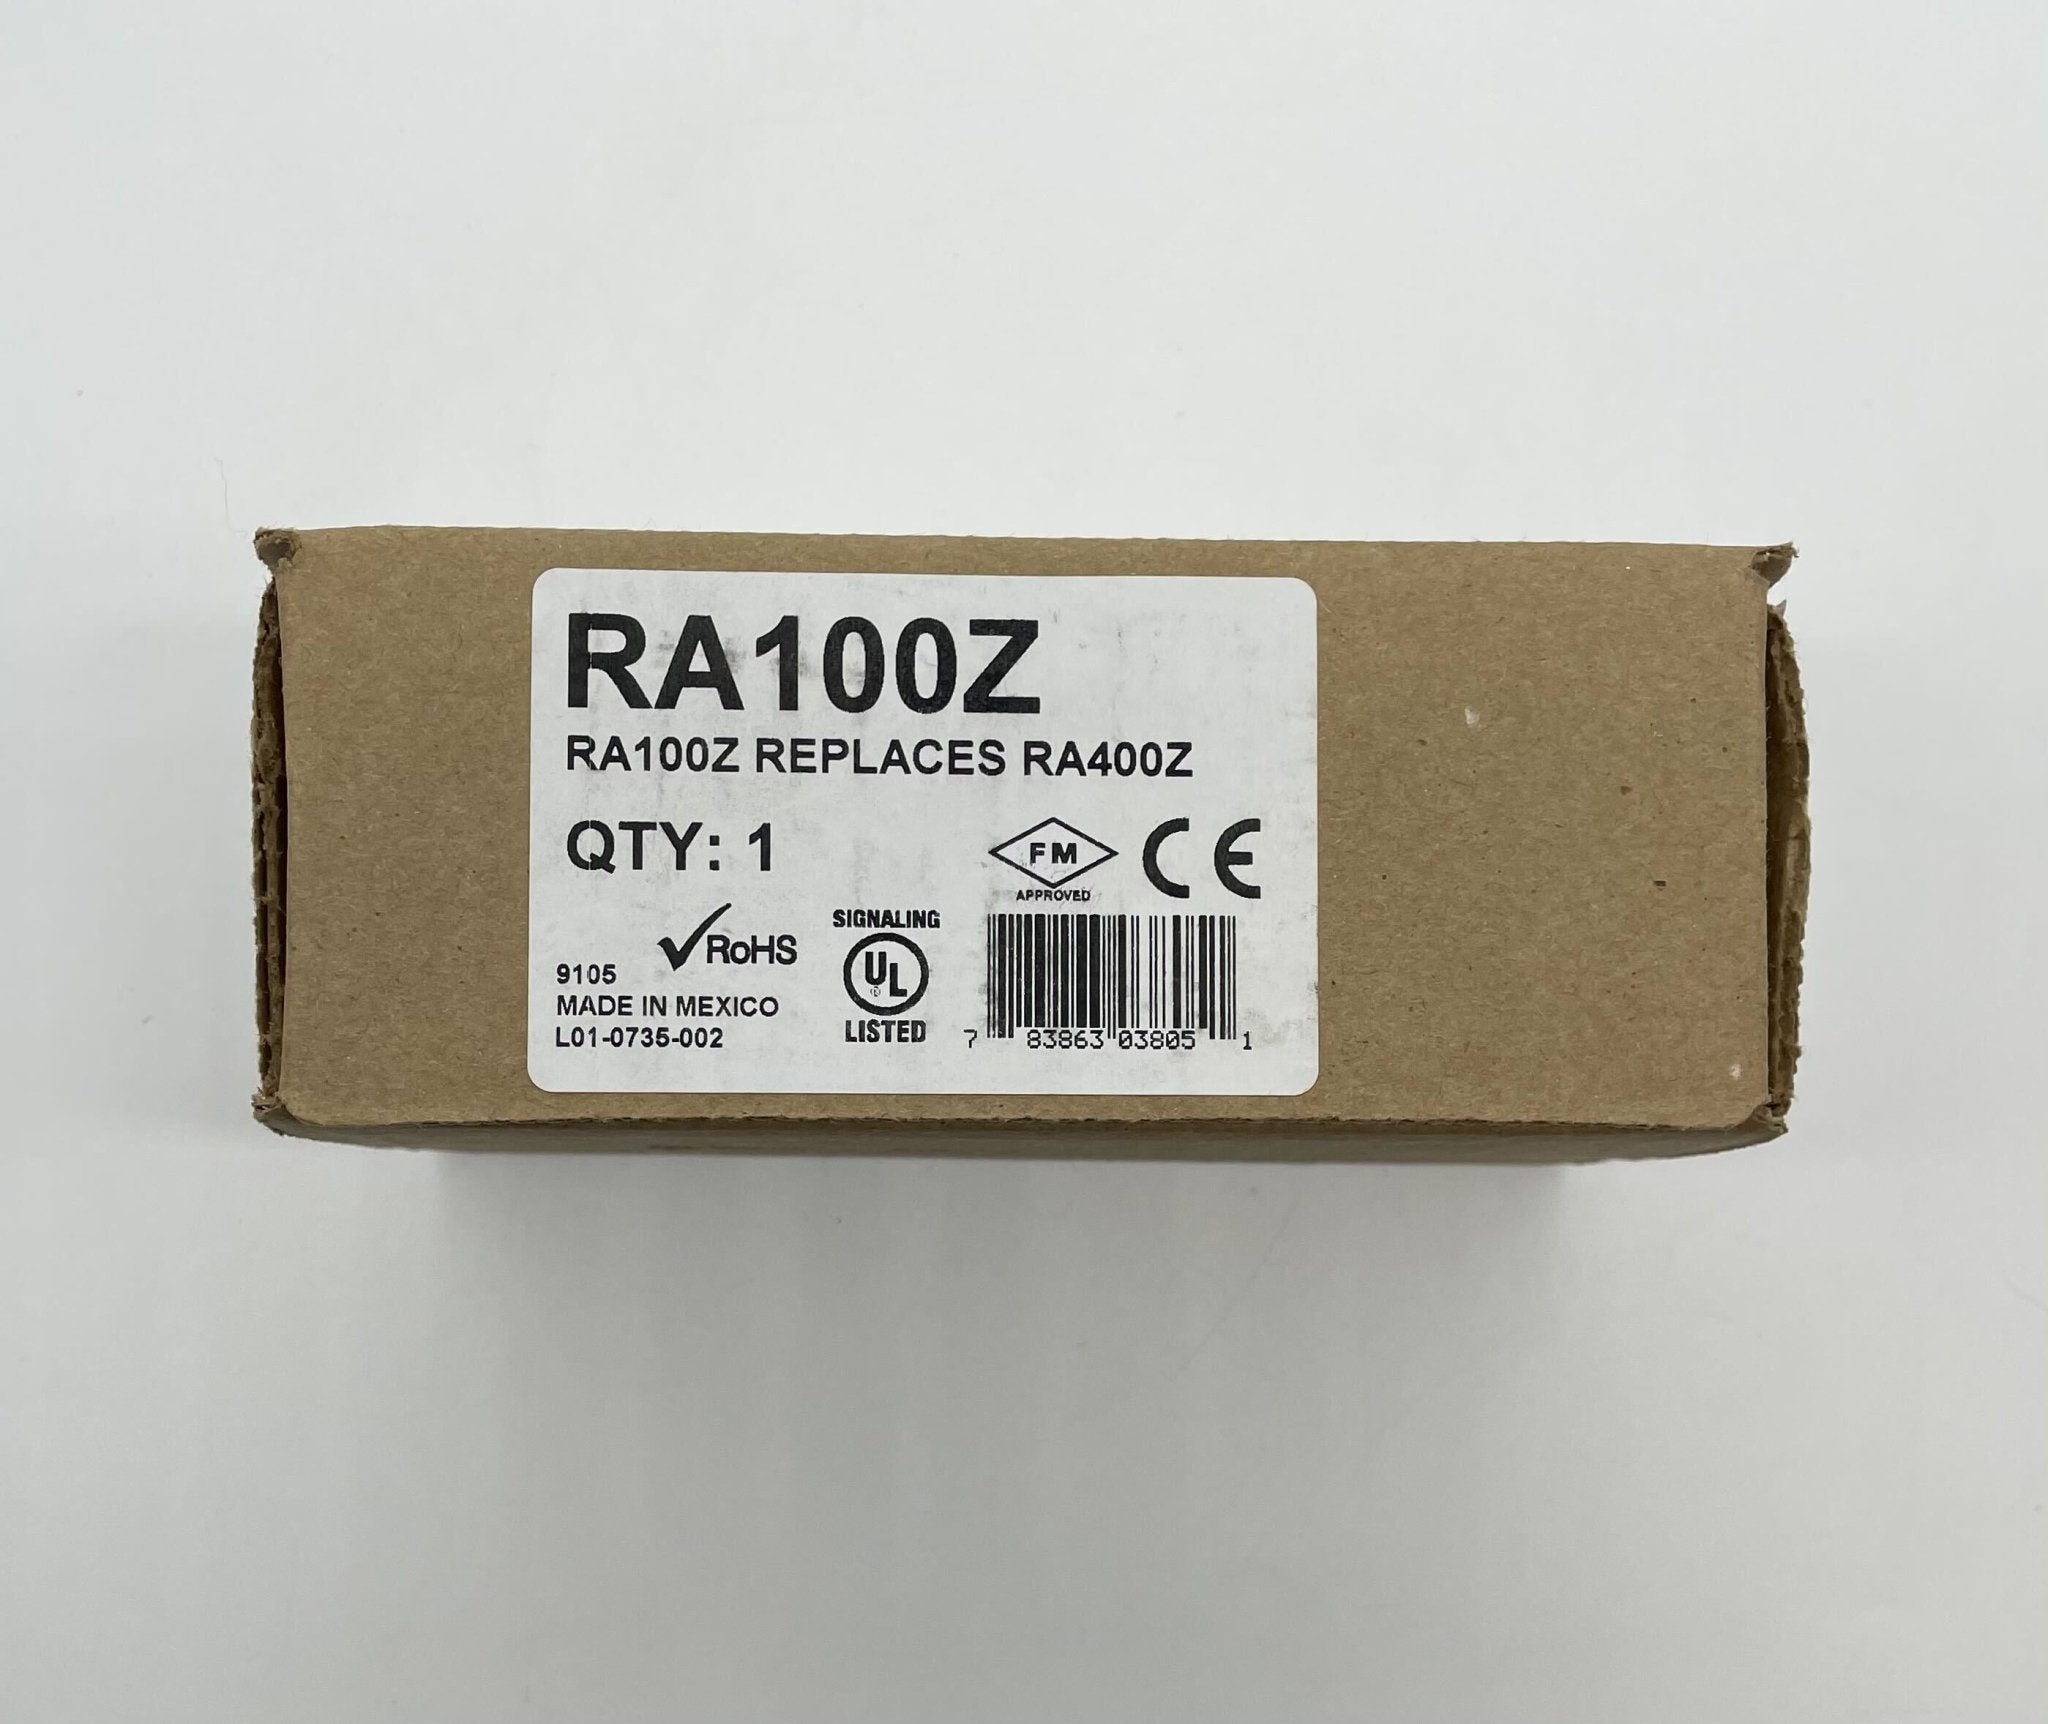 System Sensor RA100Z Remote Annunciator - The Fire Alarm Supplier